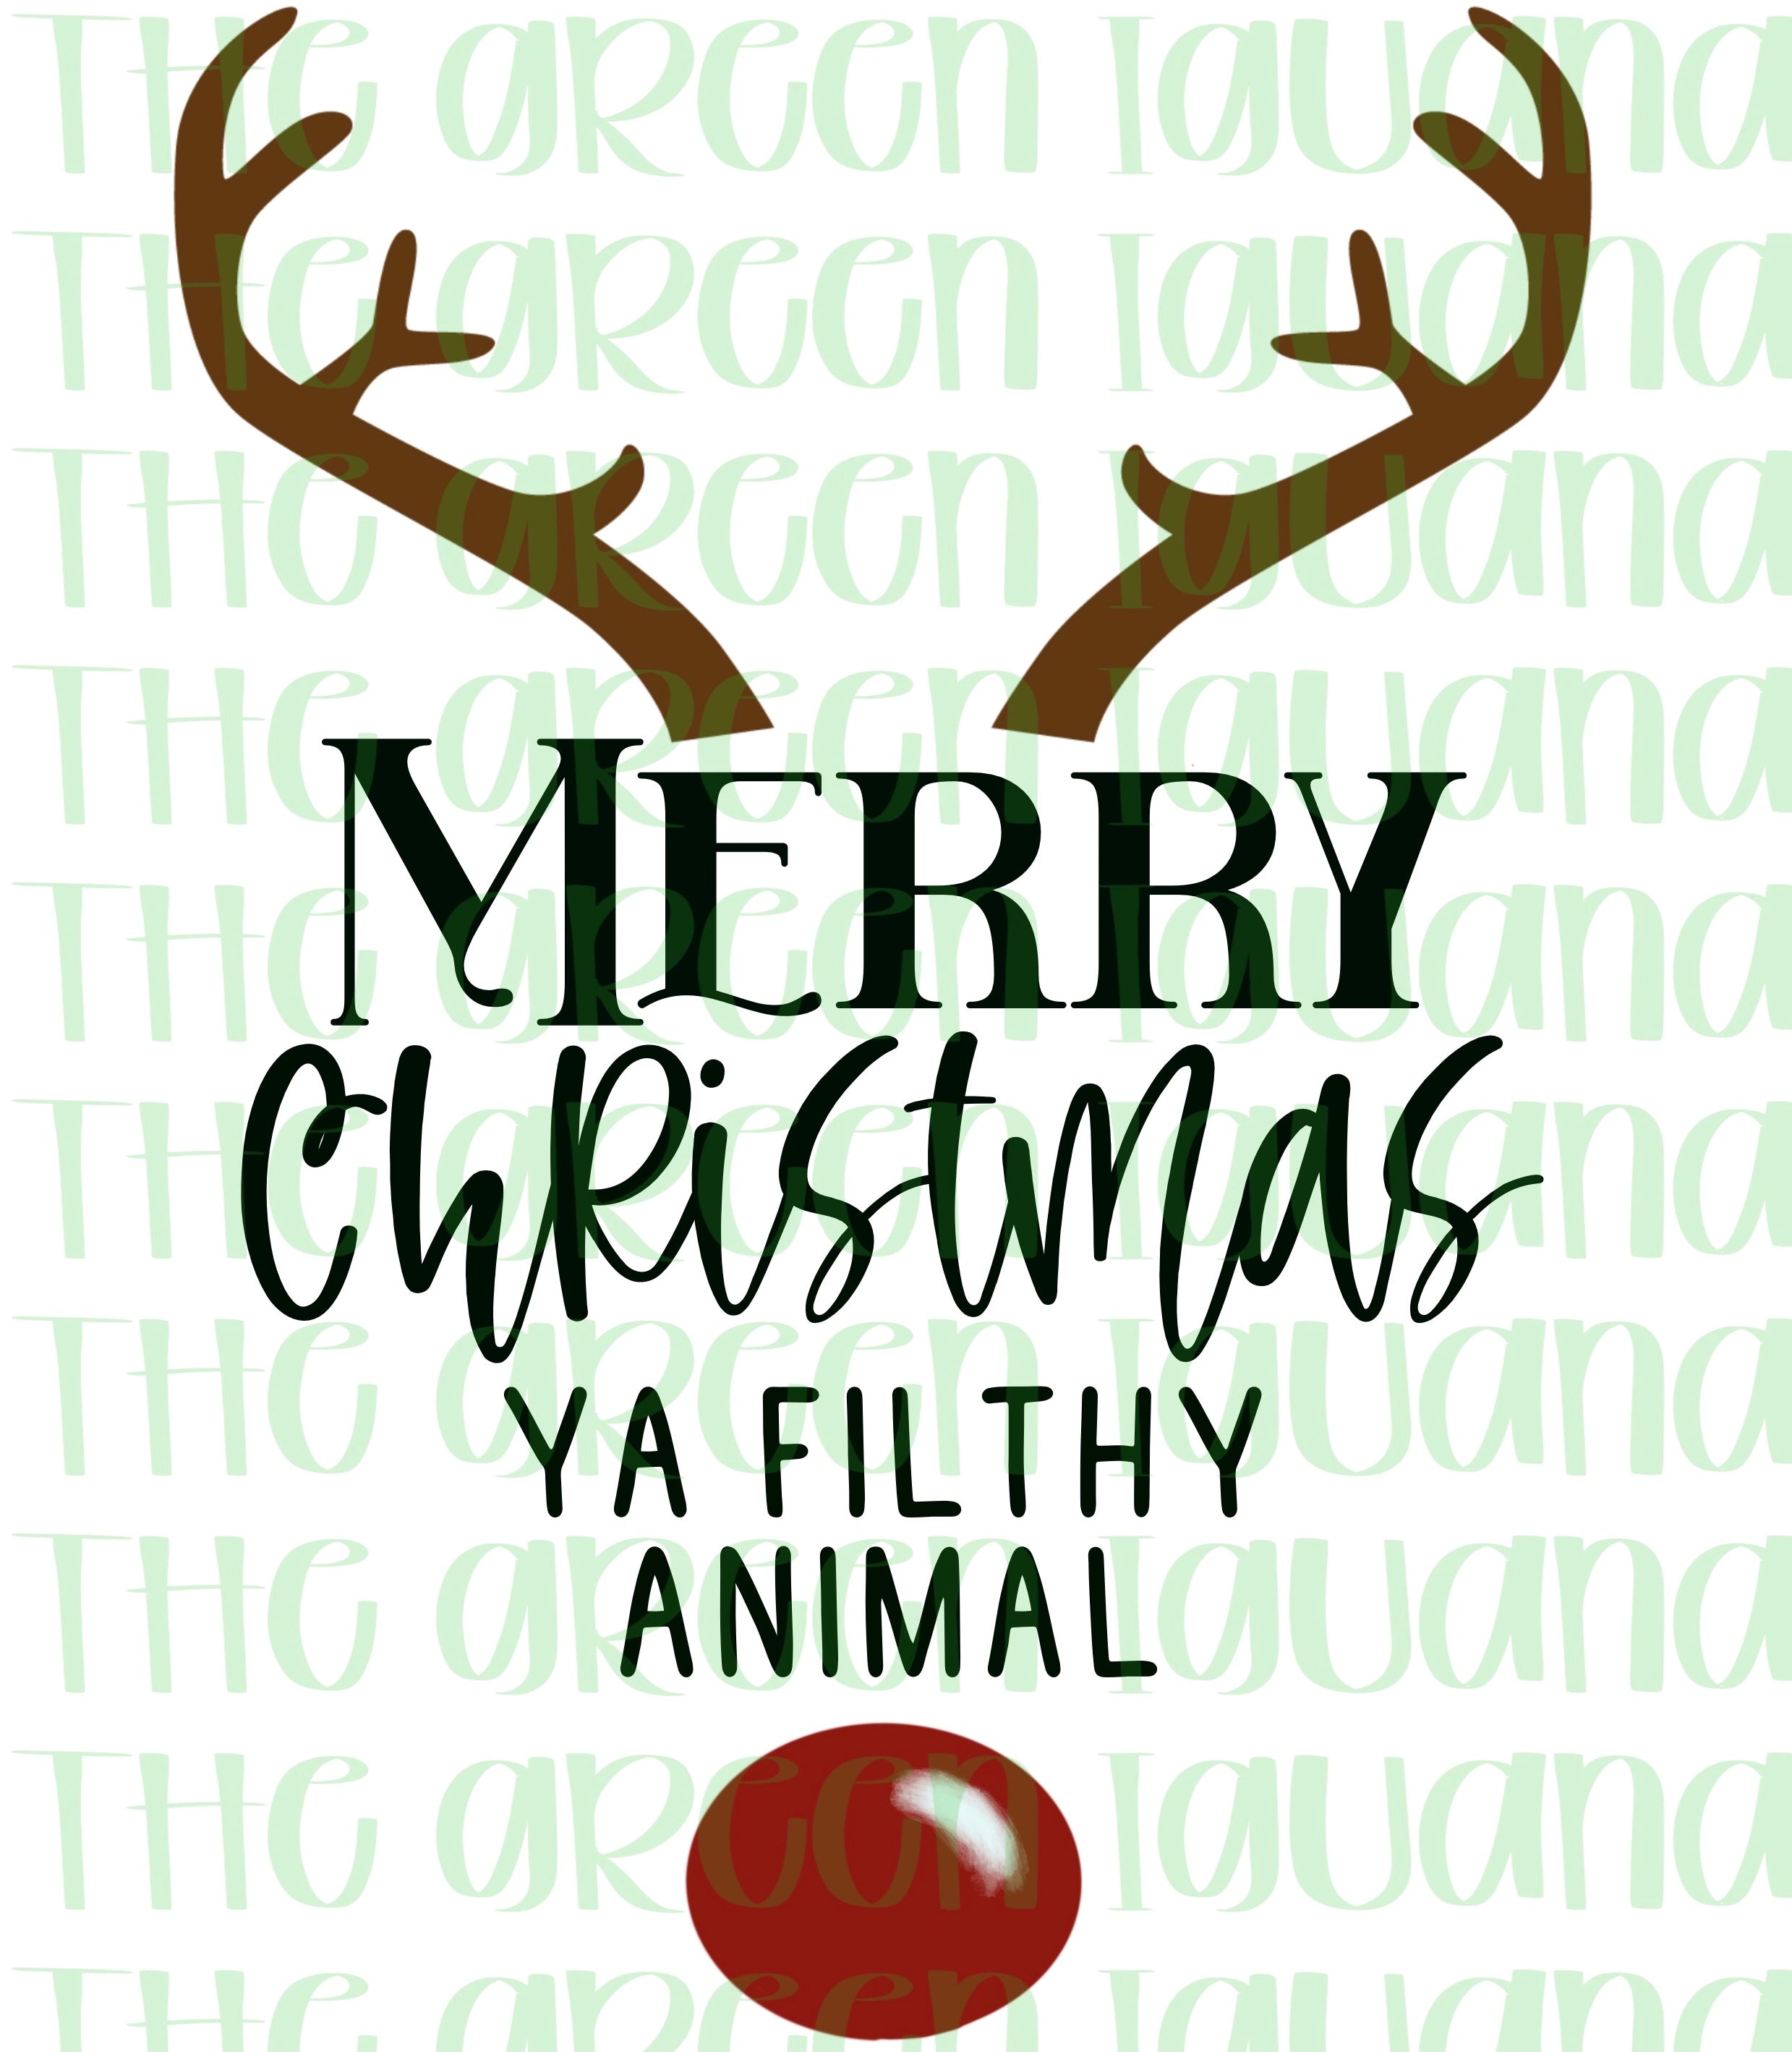 Merry Christmas ya filthy animal - DIGITAL